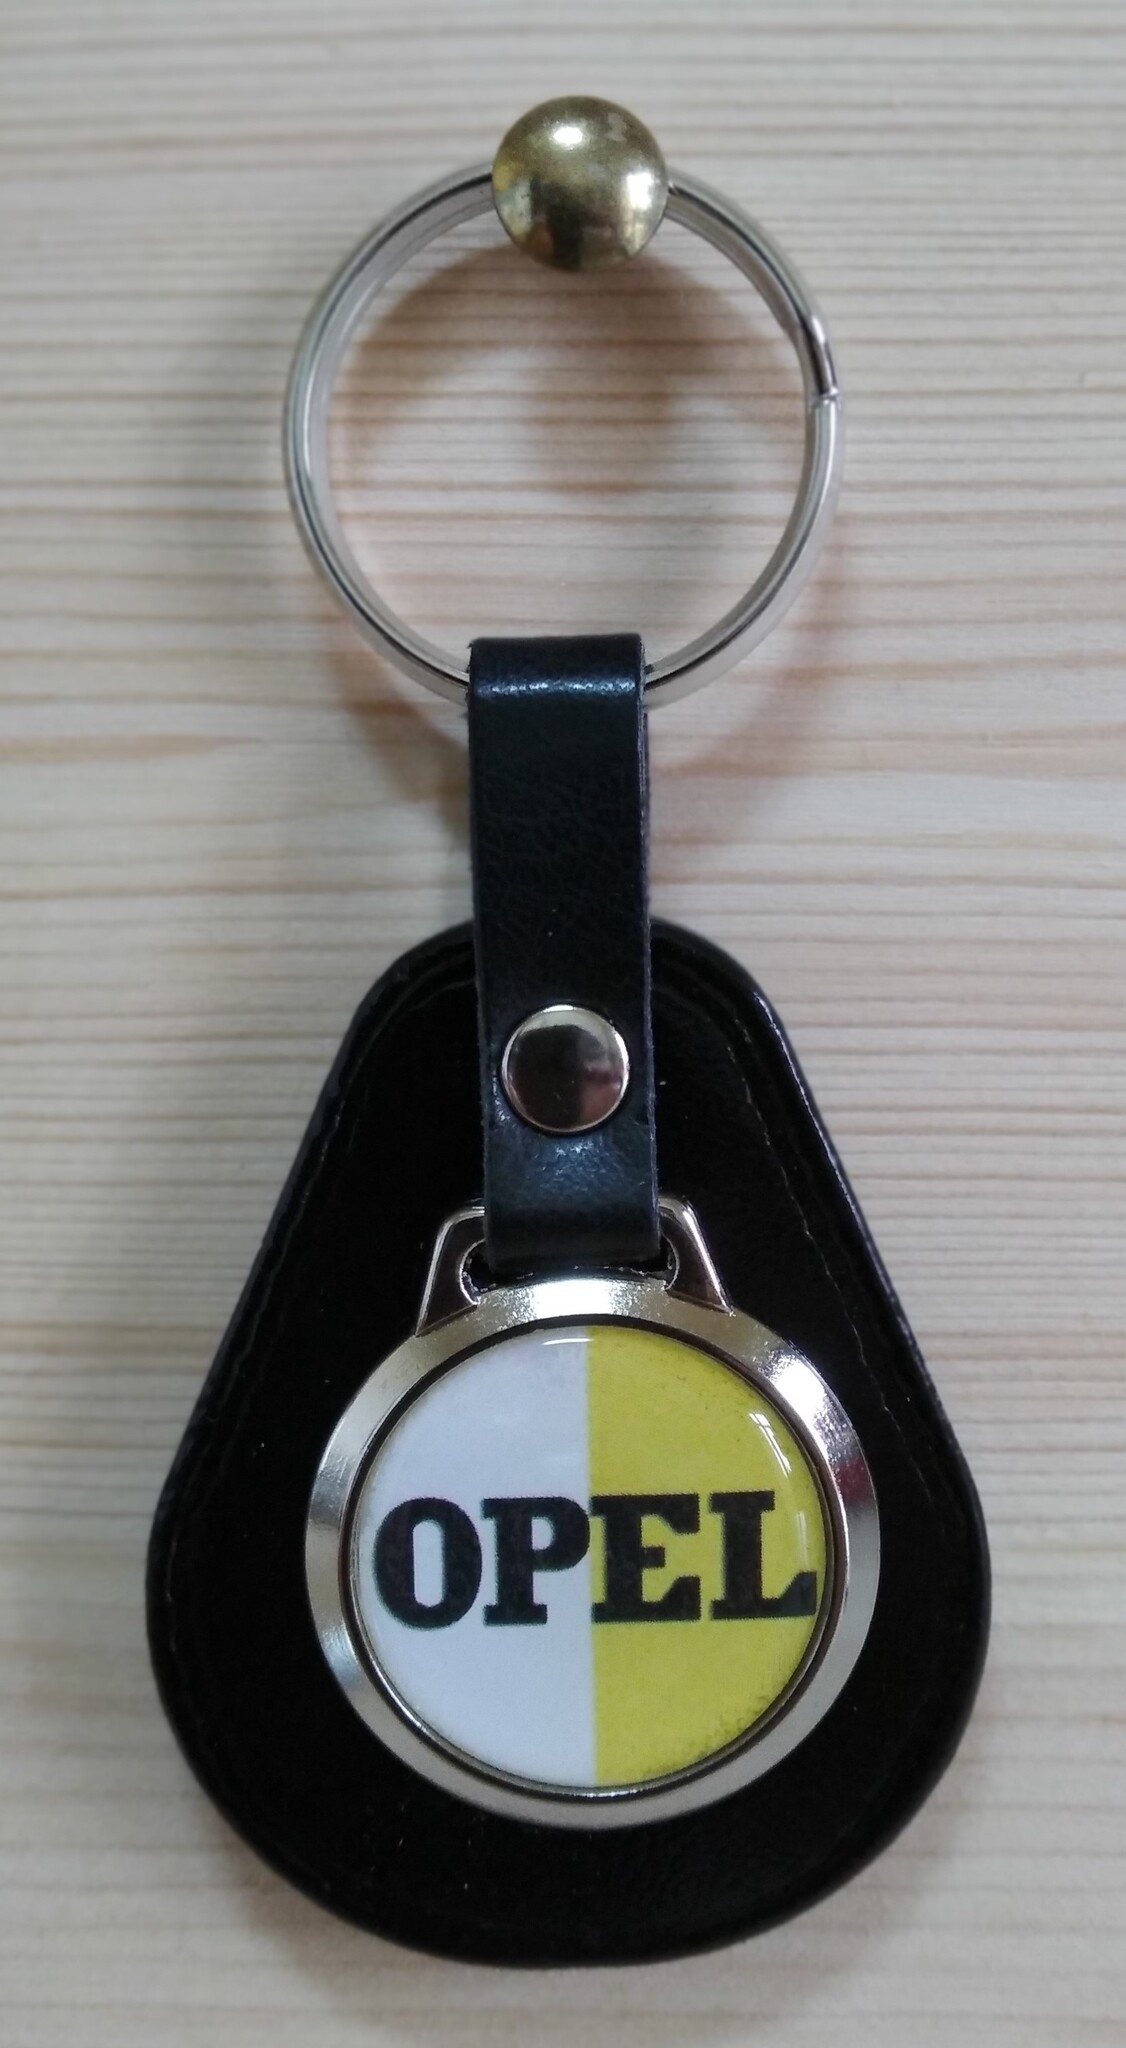 OPEL OPEL Porte-clés avec logo. Cuir noir